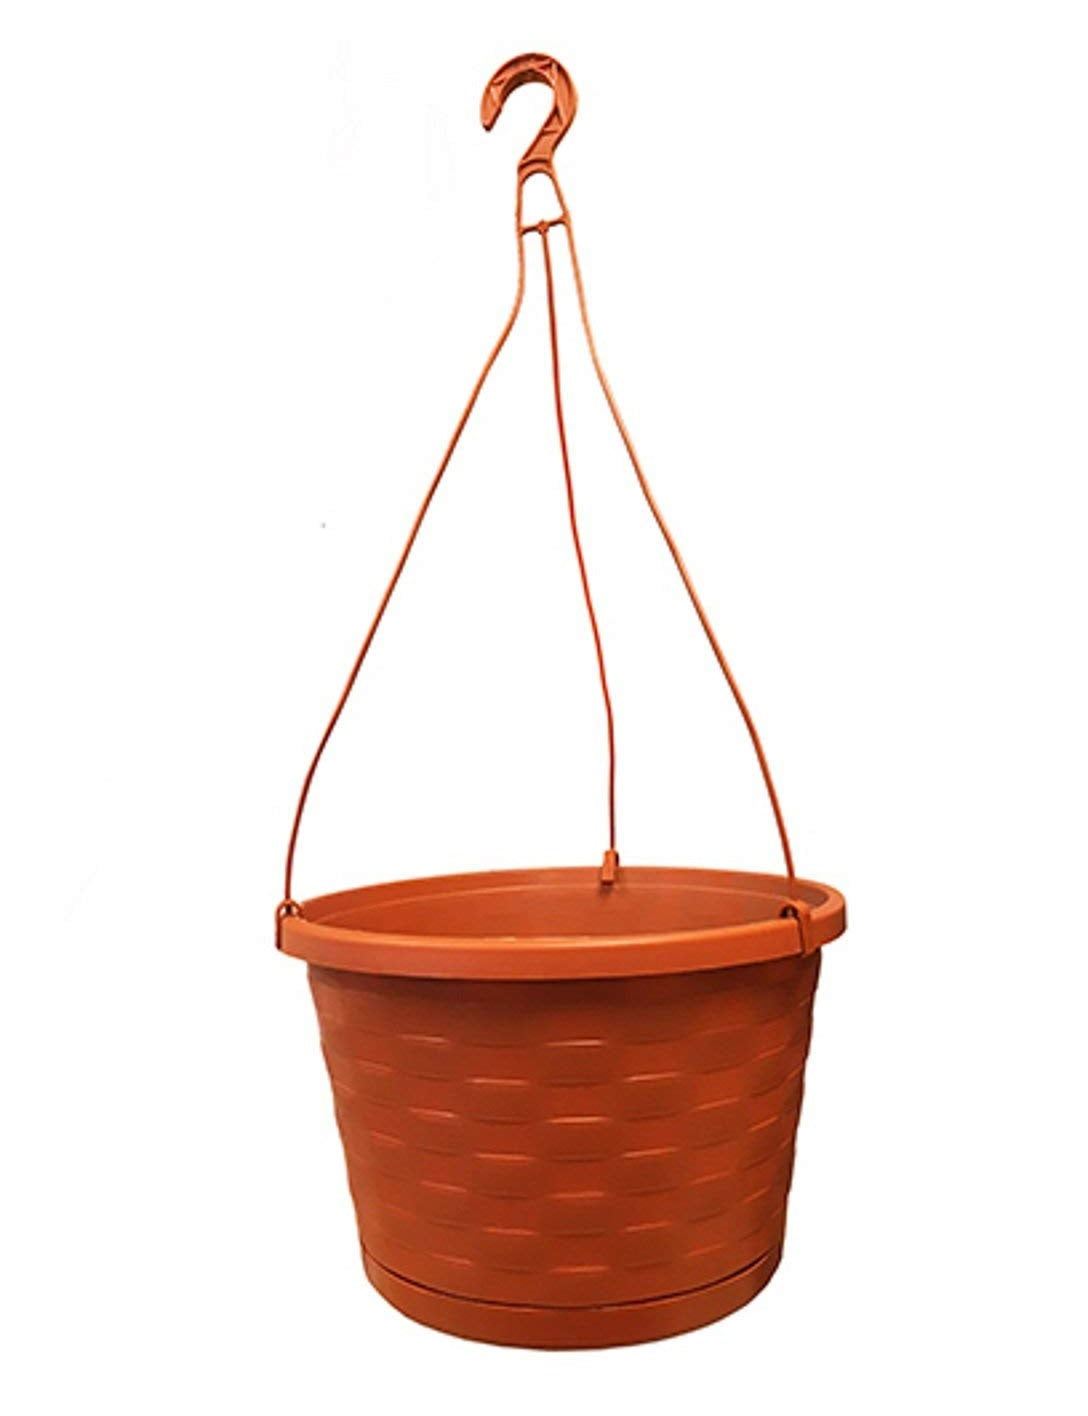 buy hanging planters & pots at cheap rate in bulk. wholesale & retail landscape supplies & farm fencing store.